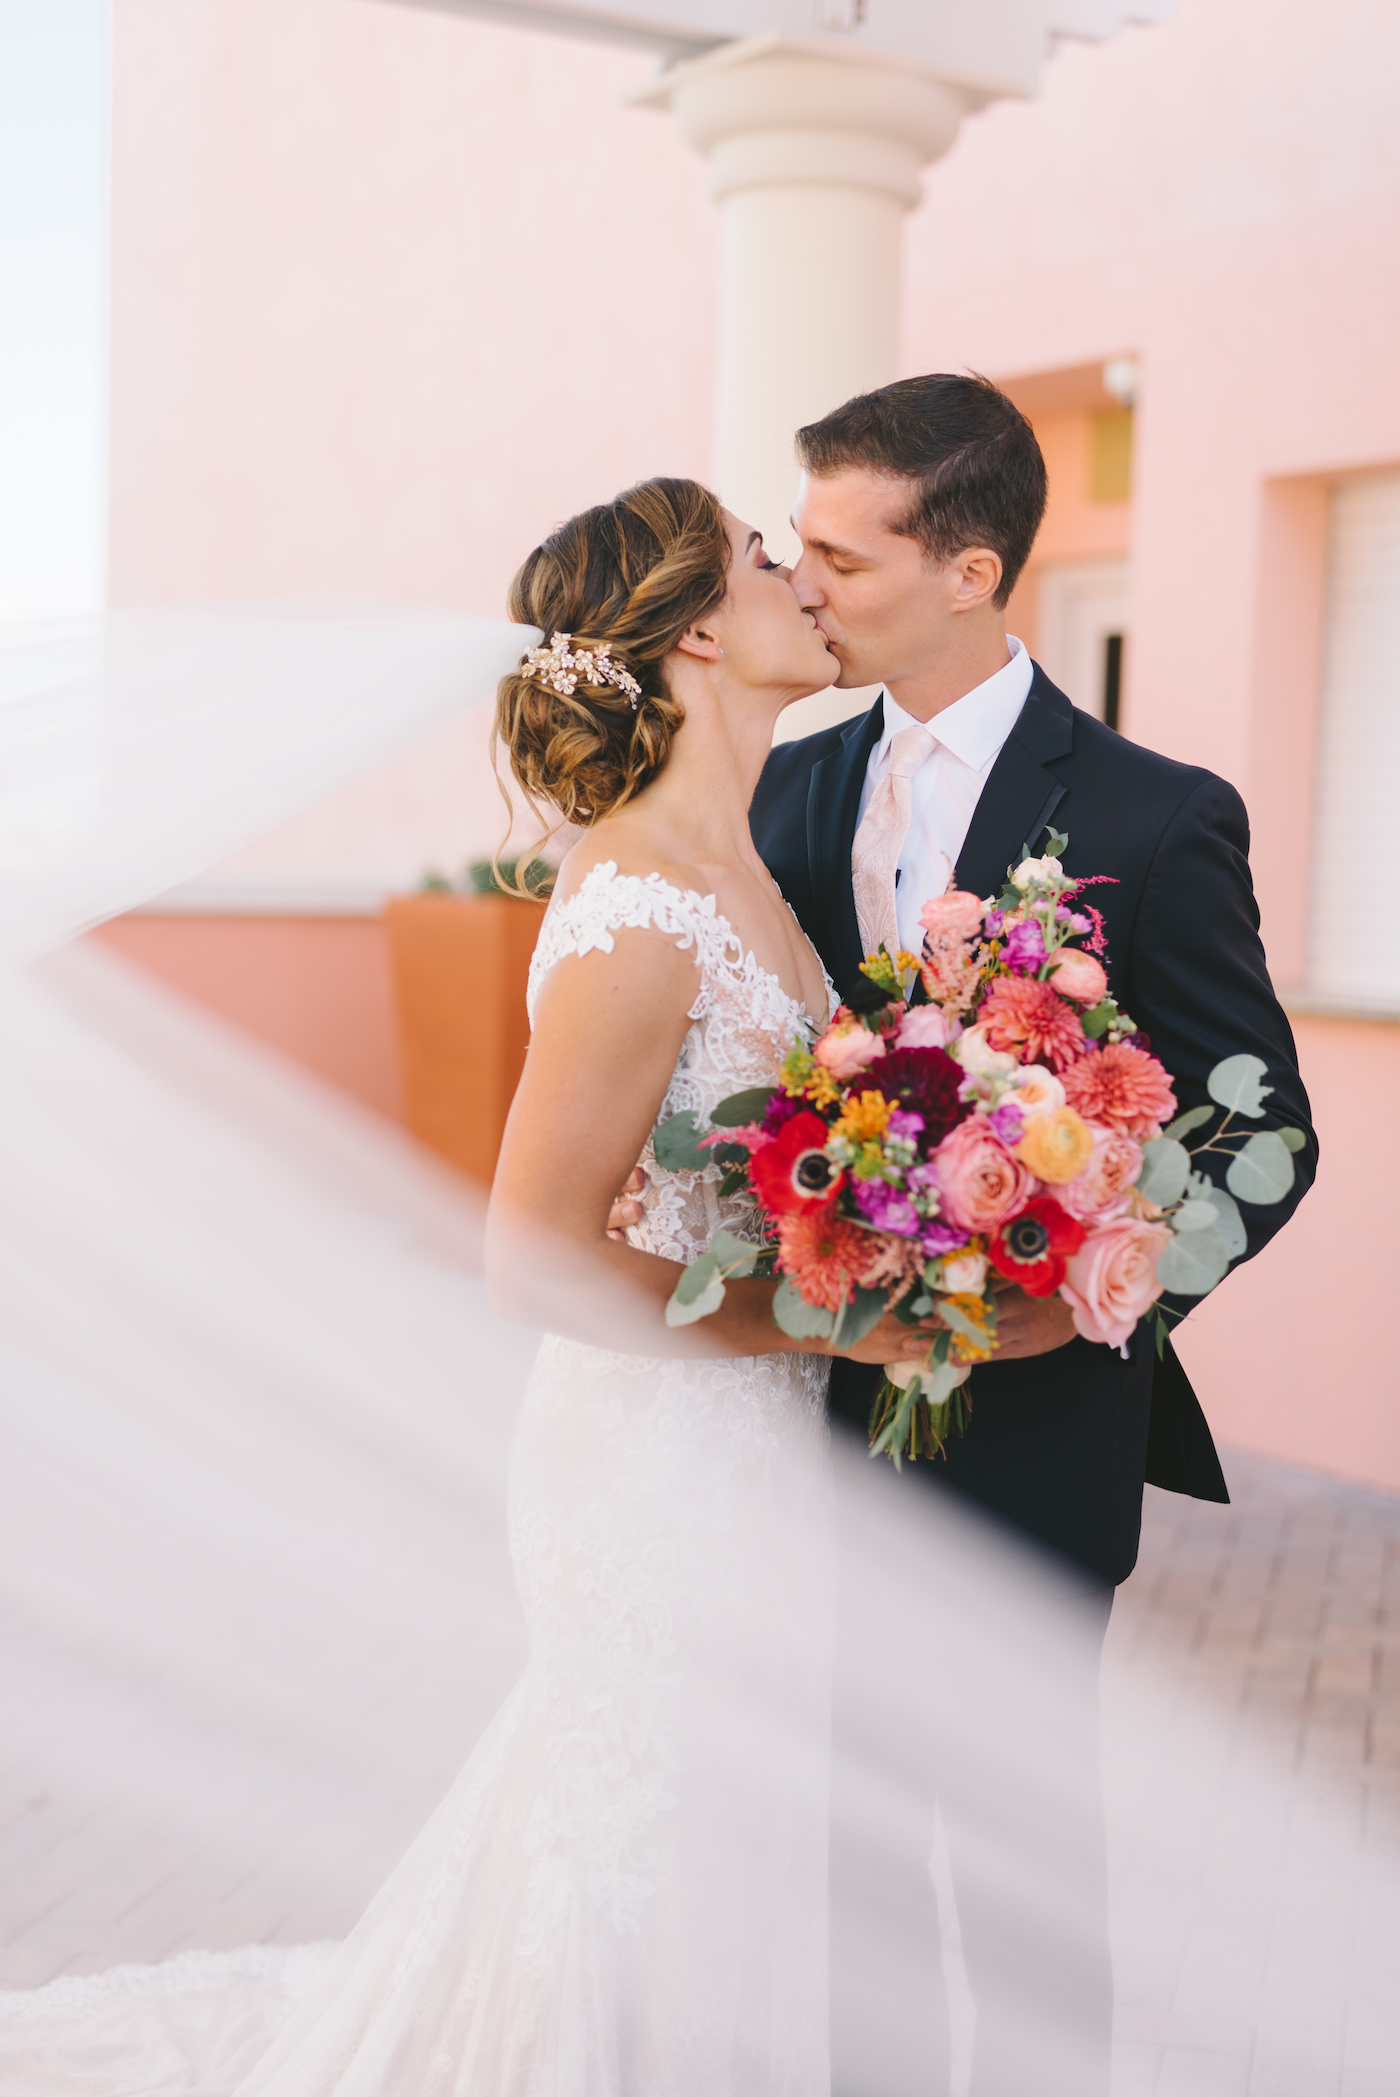 Bride and Groom Portrait at Clearwater Wedding Venue Hyatt Regency Beach Hotel | Wedding Photography Veil Shot | Bright Tropical Colorful Wedding Bouquet | Tampa Bay Wedding Photographer Kera Photography